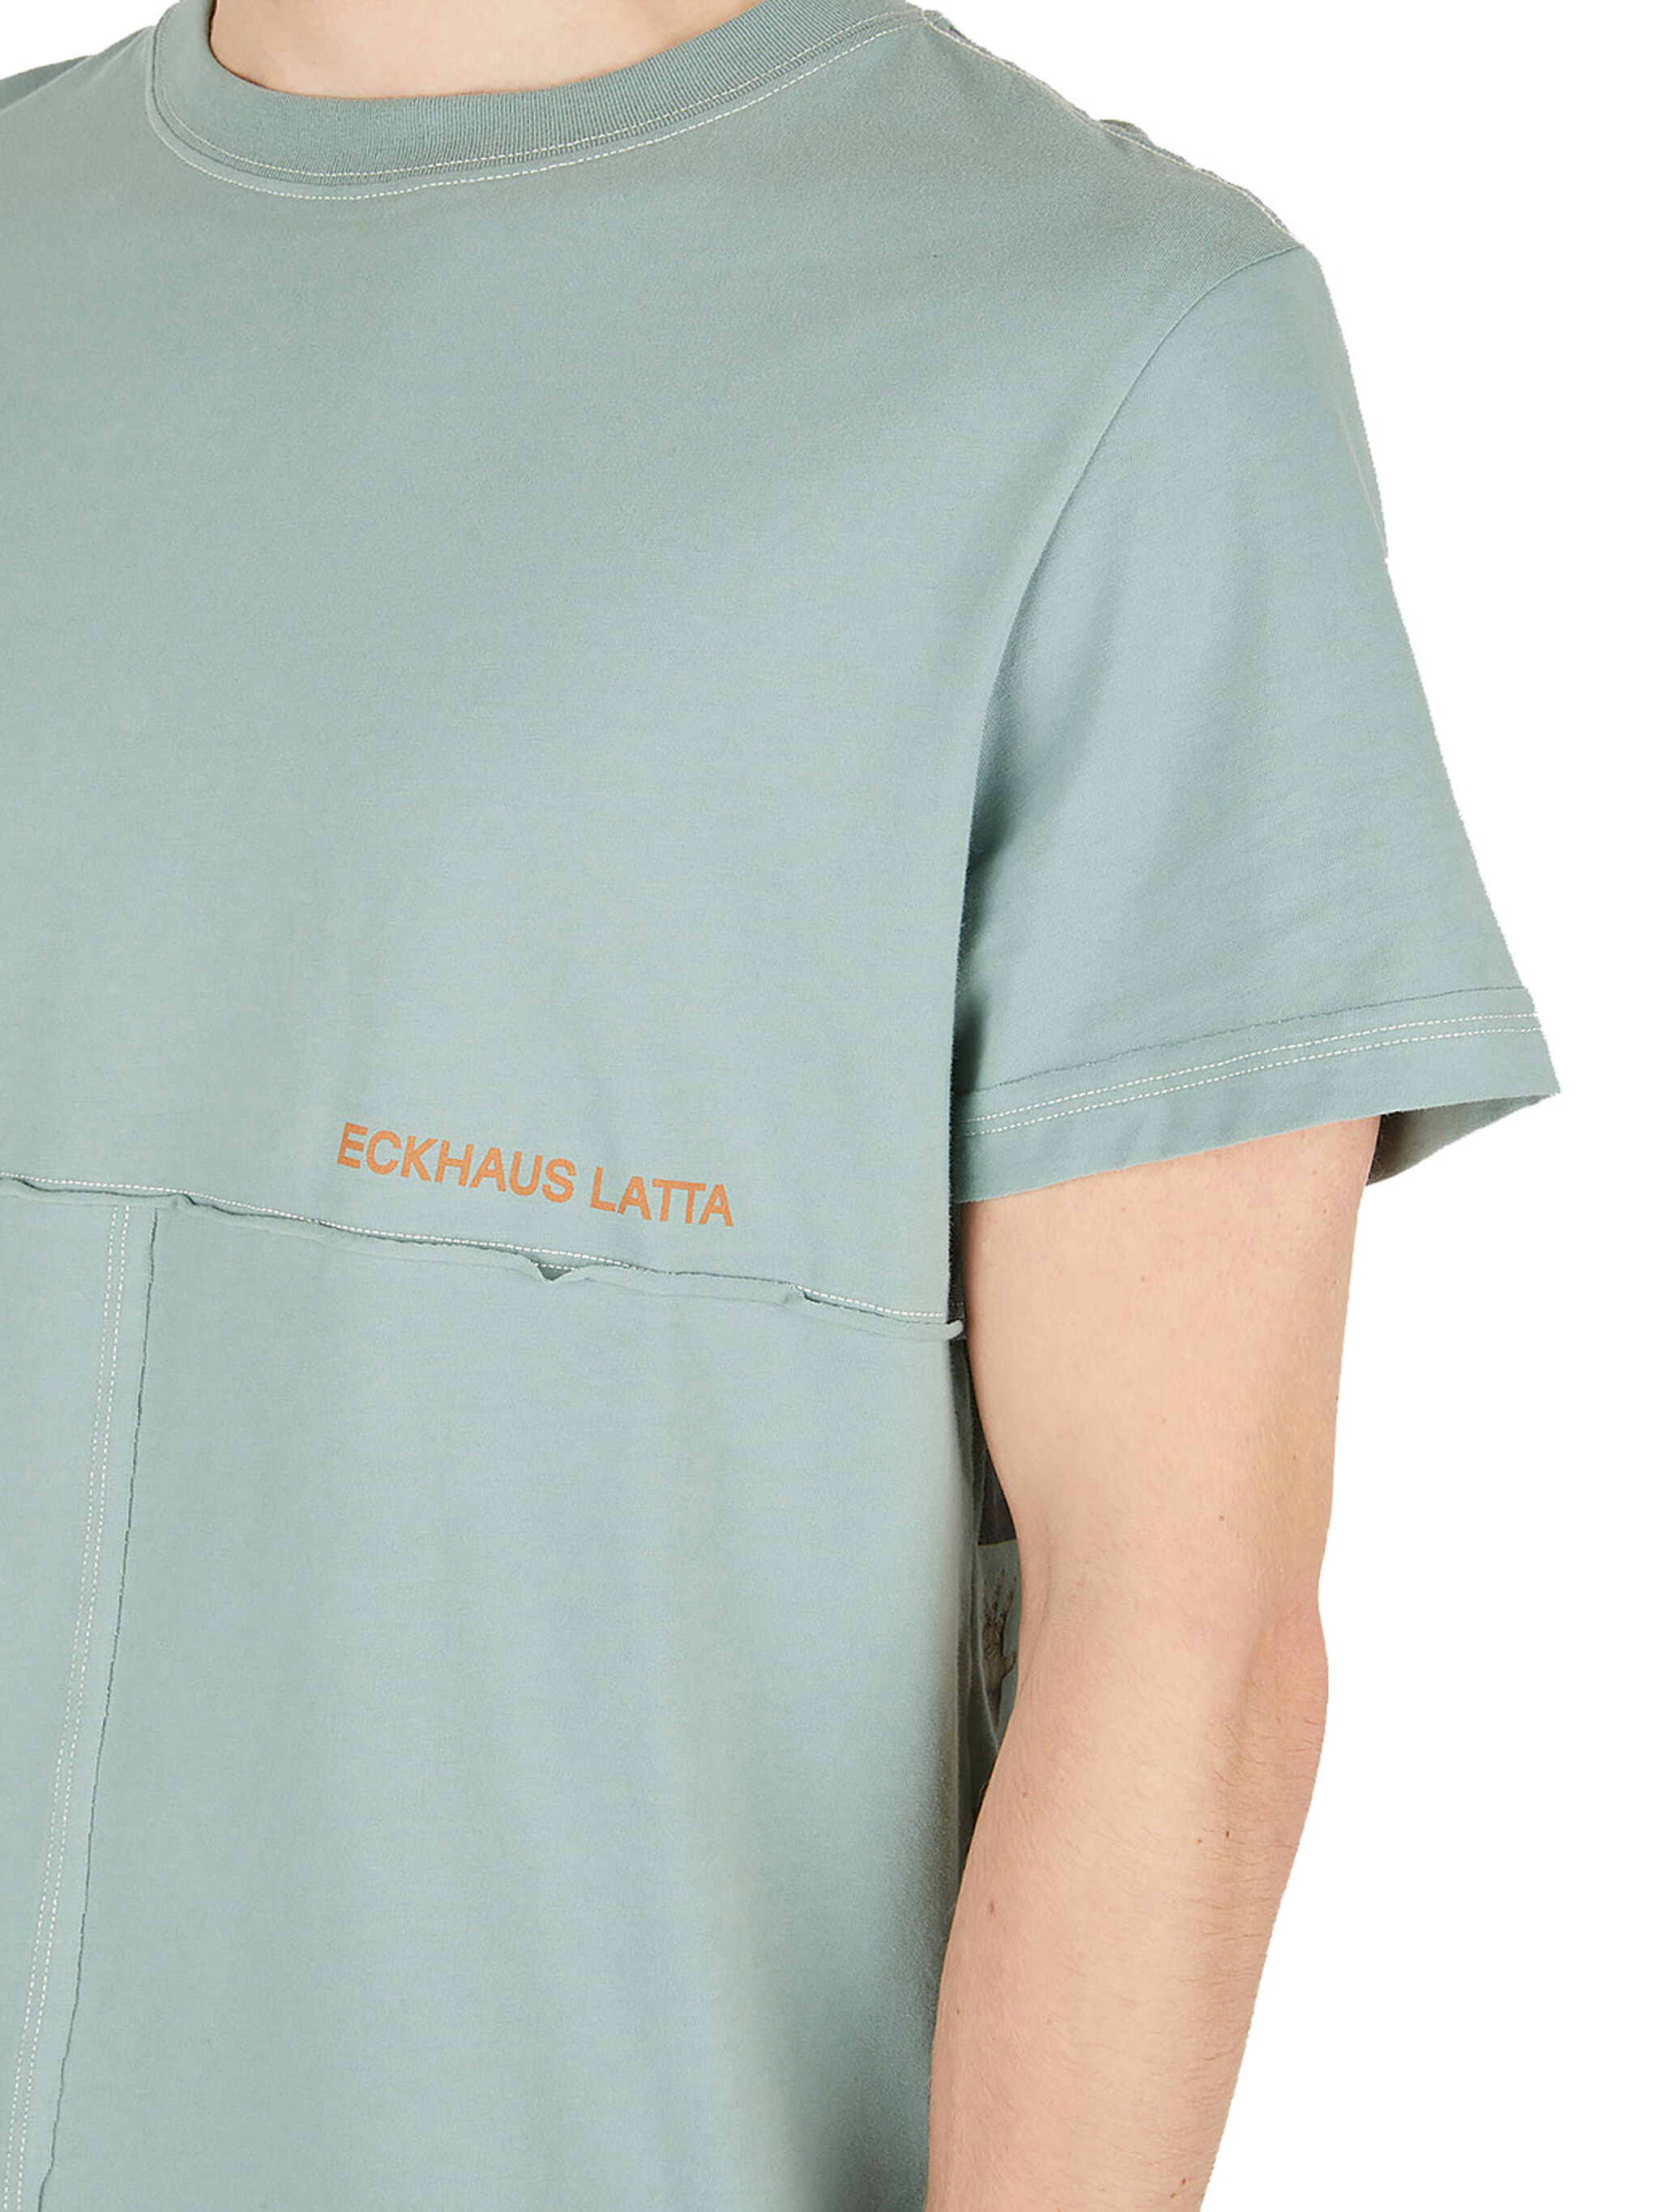 Eckhaus Latta Lapped T-Shirt | THE FLAMEL®